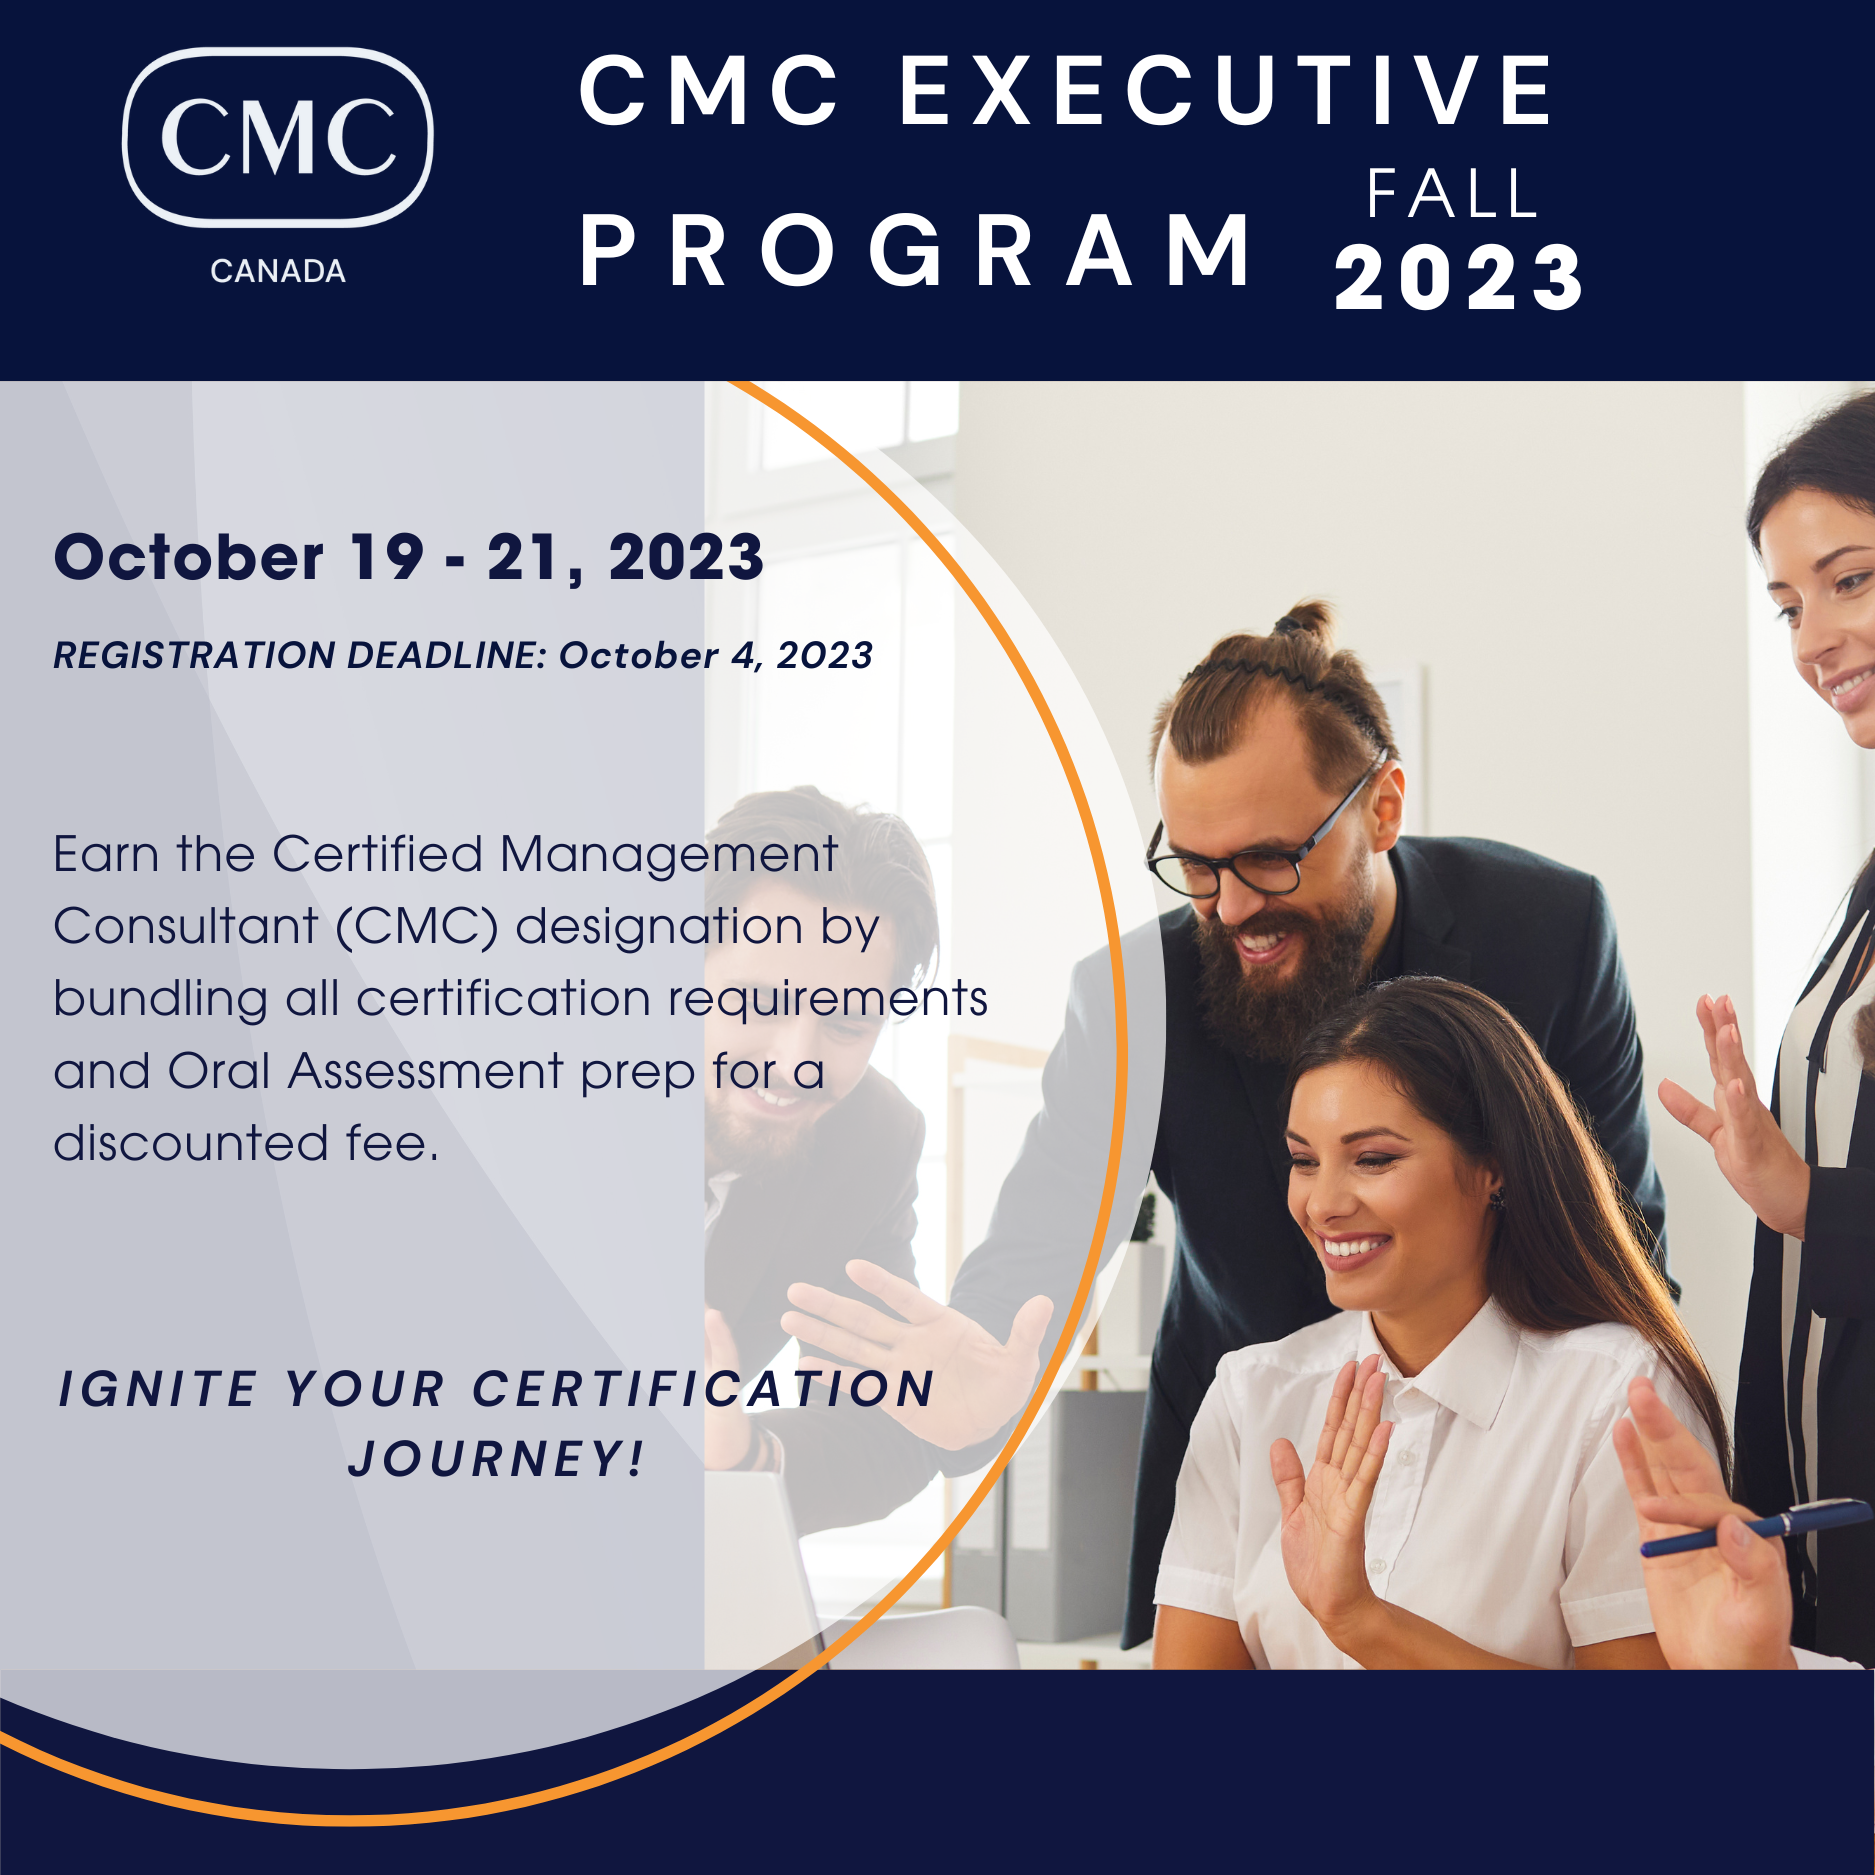 CMC Executive Program Fall 2023